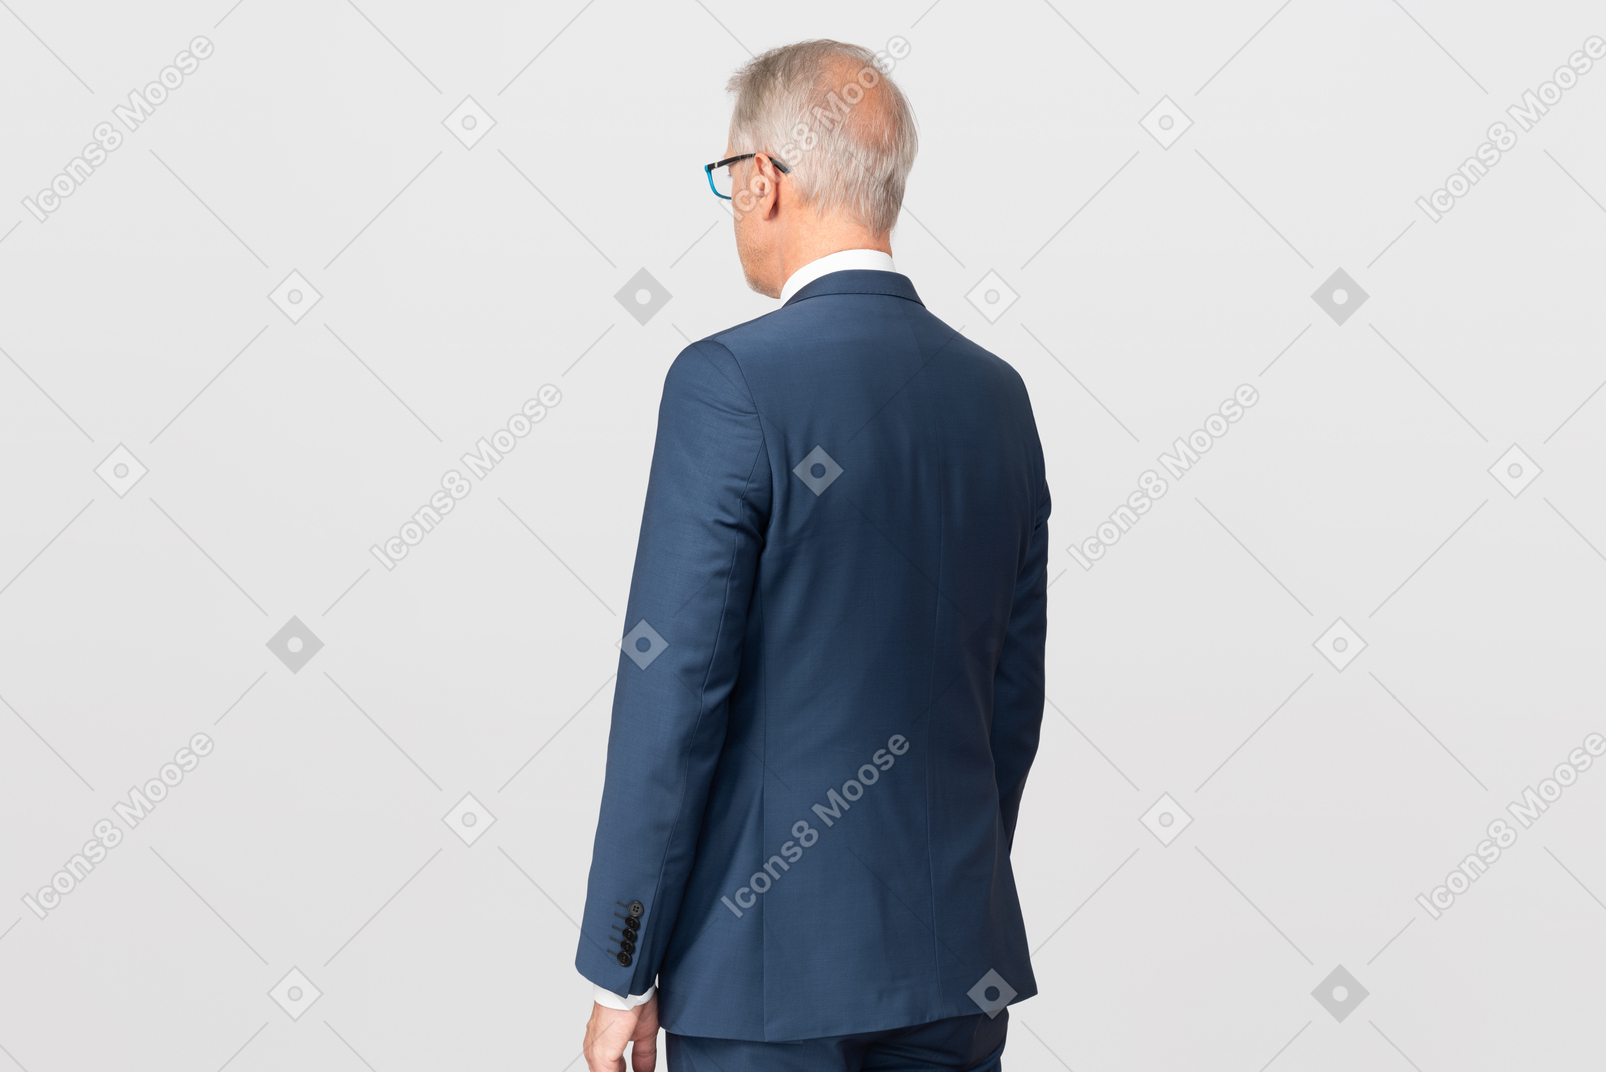 Middle aged man standing half sideways